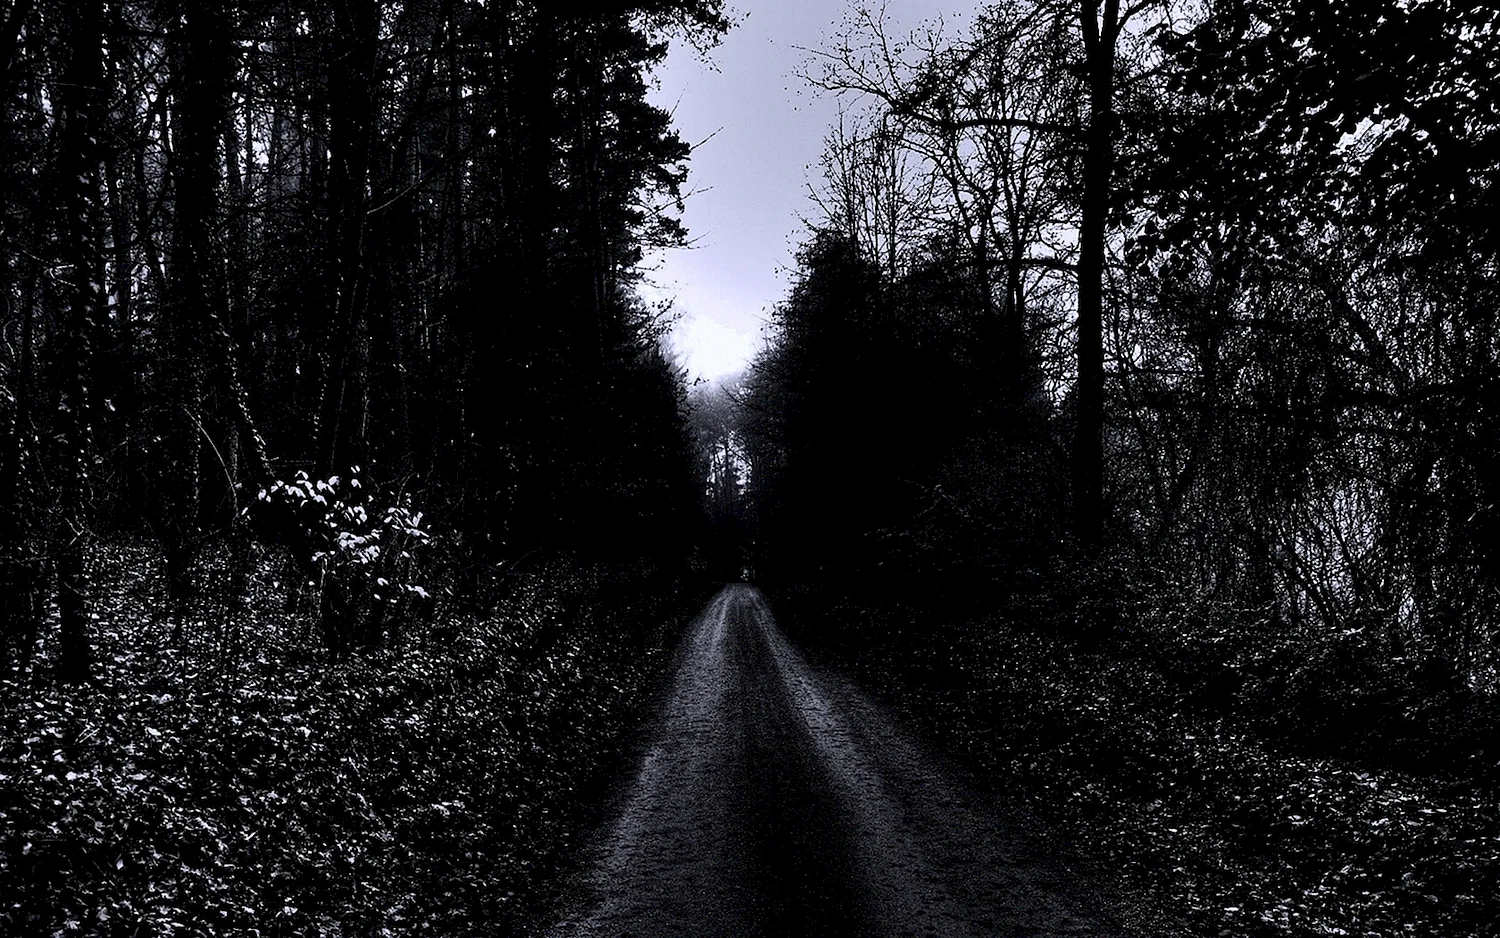 Мрачная дорога в лесу